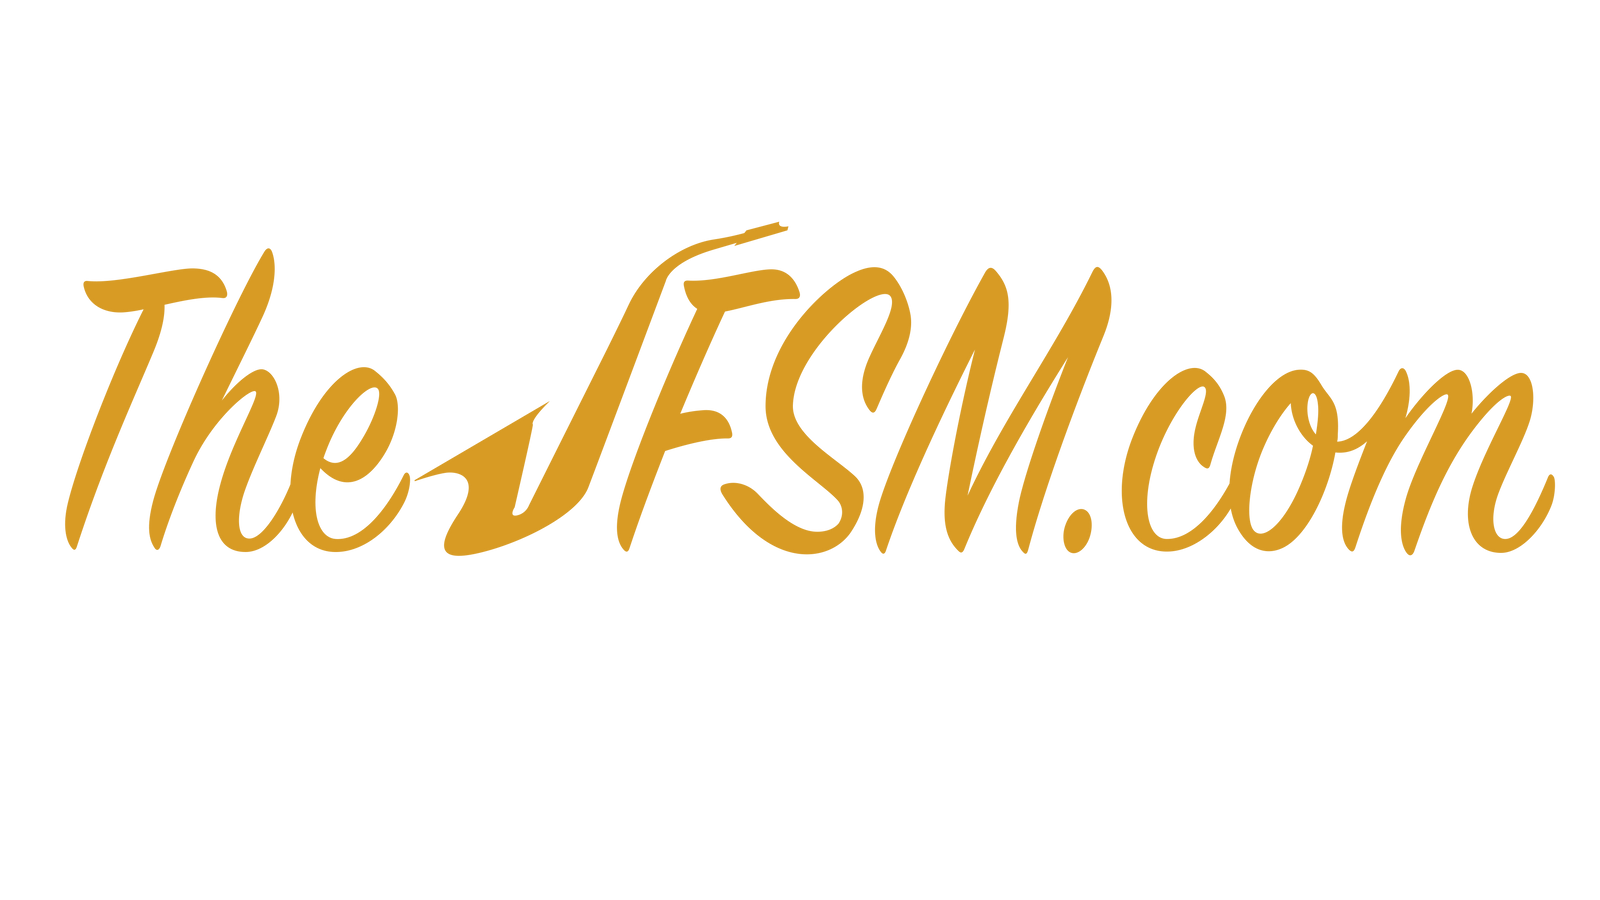 The JFSM